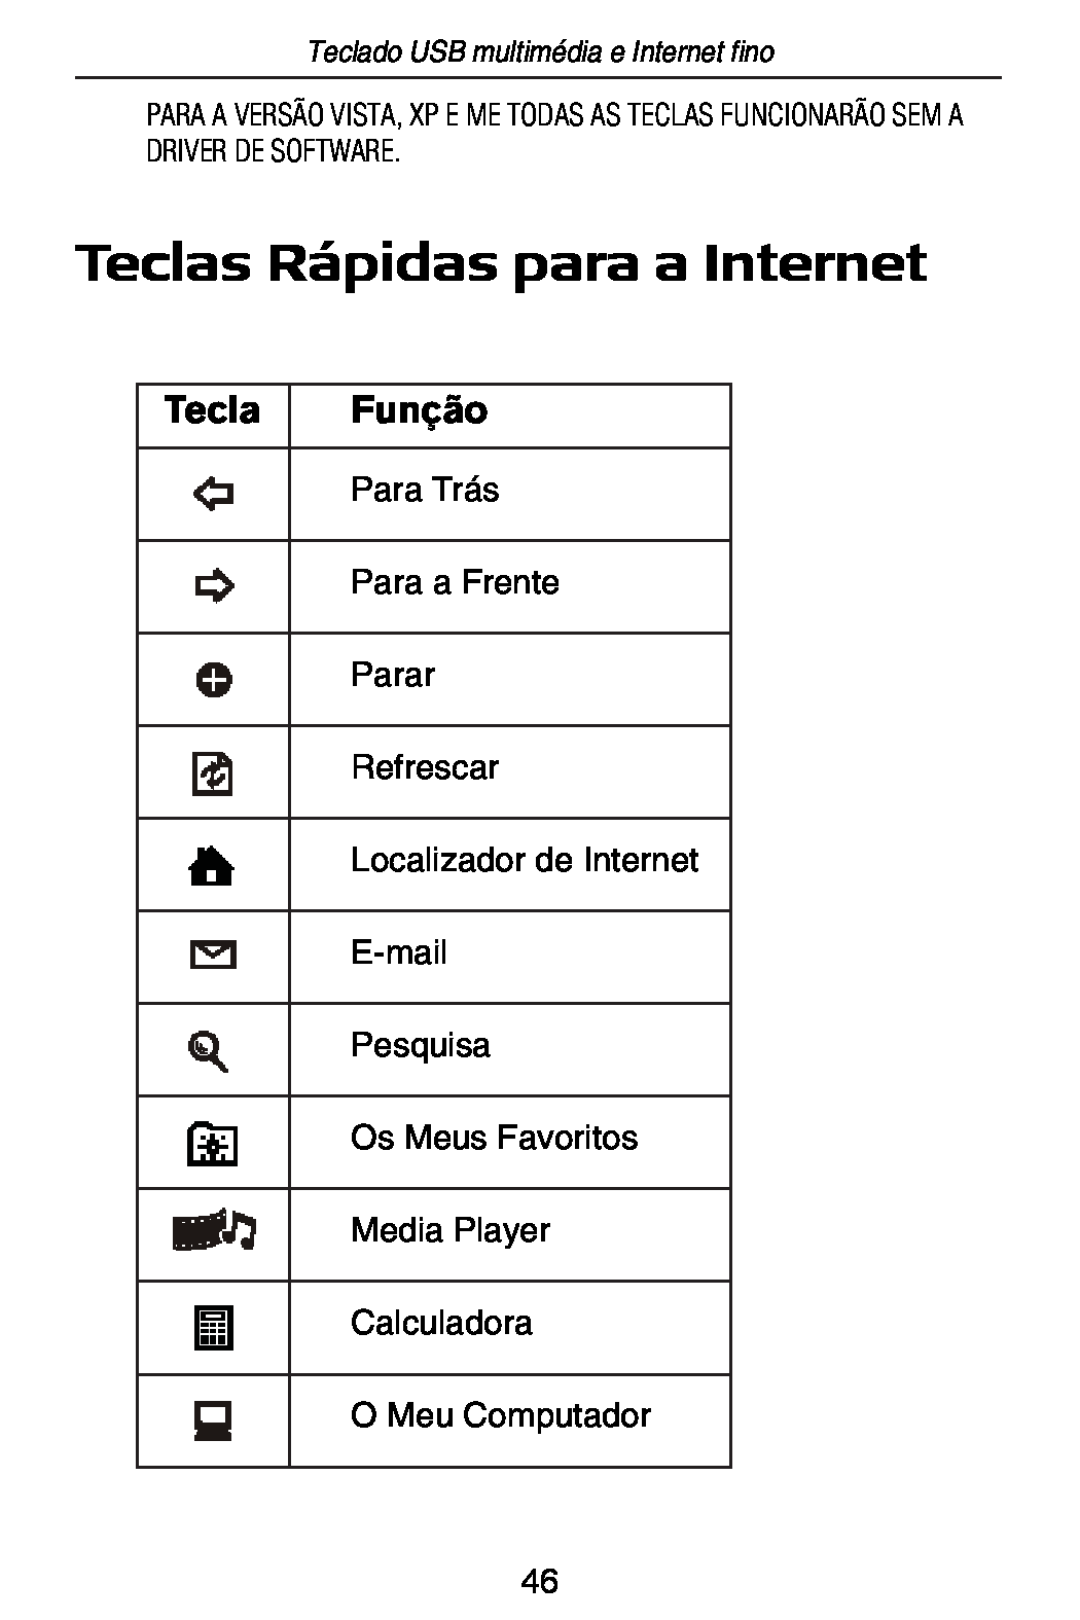 Targus slim internet multimedia USB keyboard specifications Teclas Rápidas para a Internet, Un¤§O, 4ECLA 